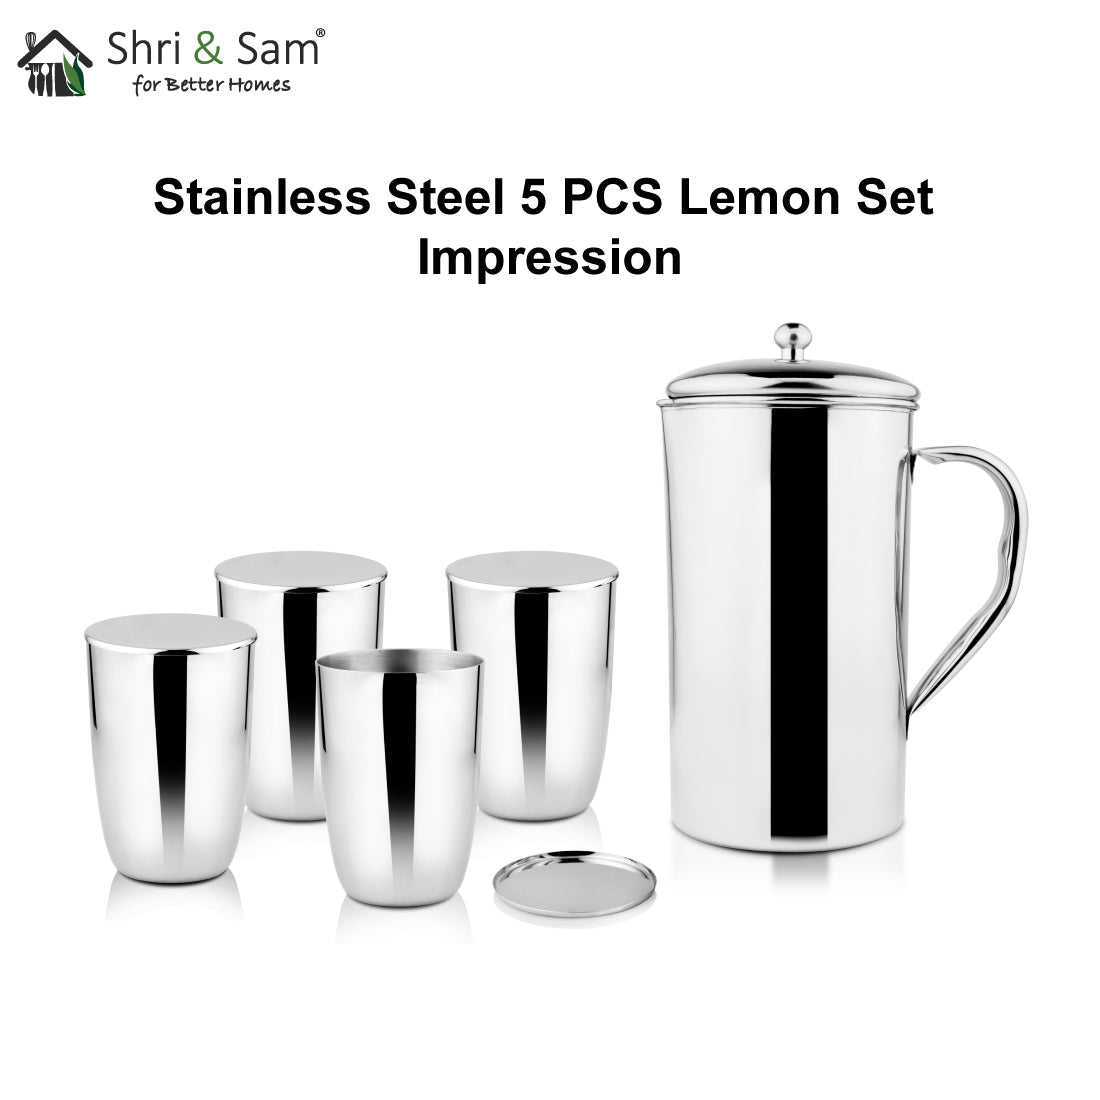 Stainless Steel 5 PCS Lemon Set Impression